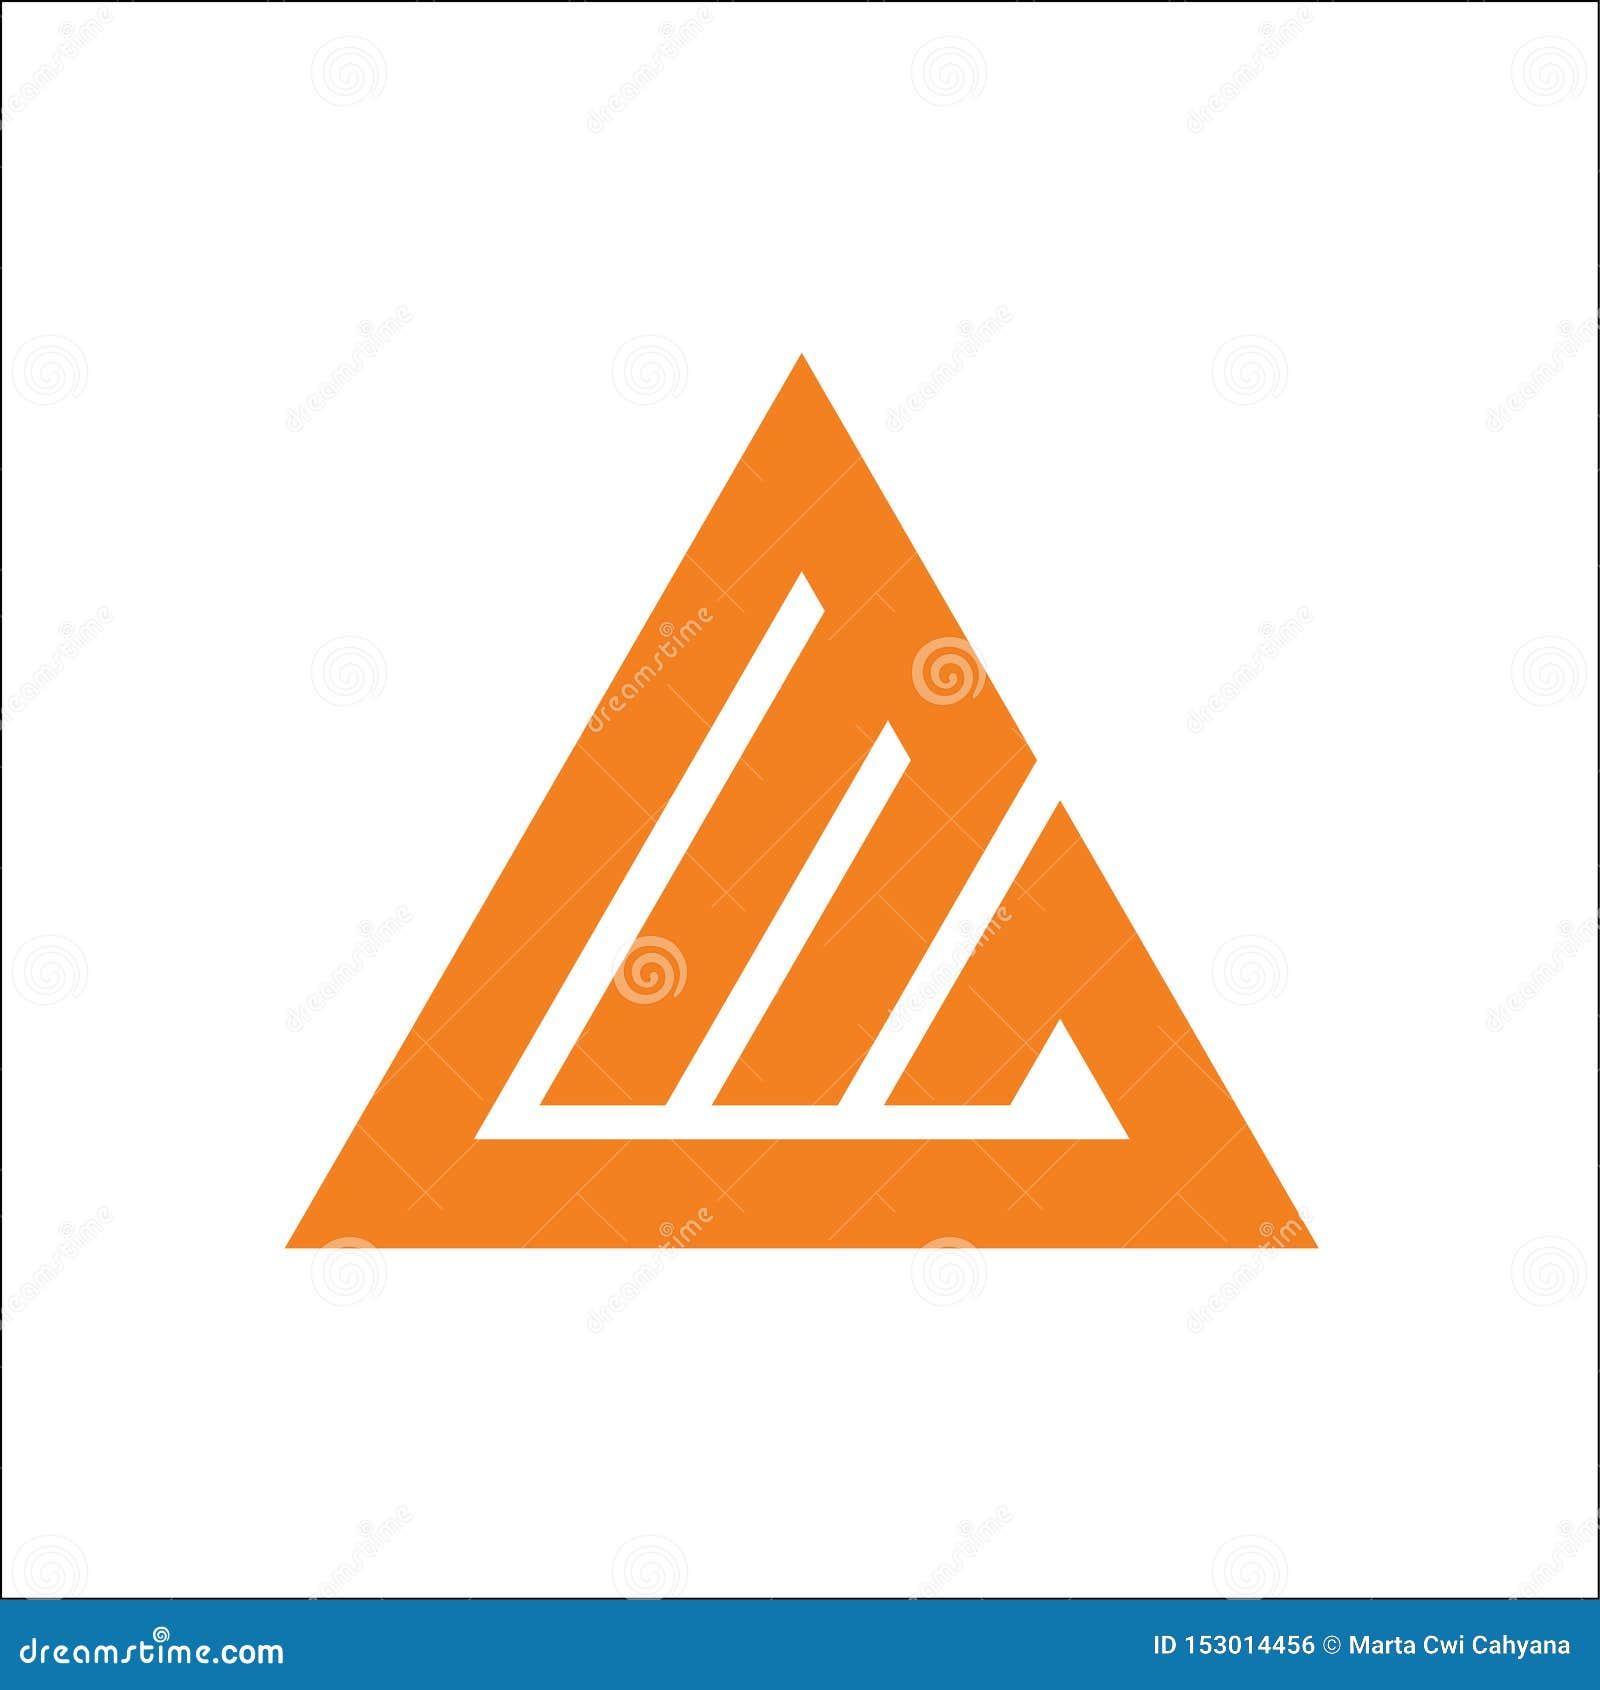 initials mg triangle logo  template